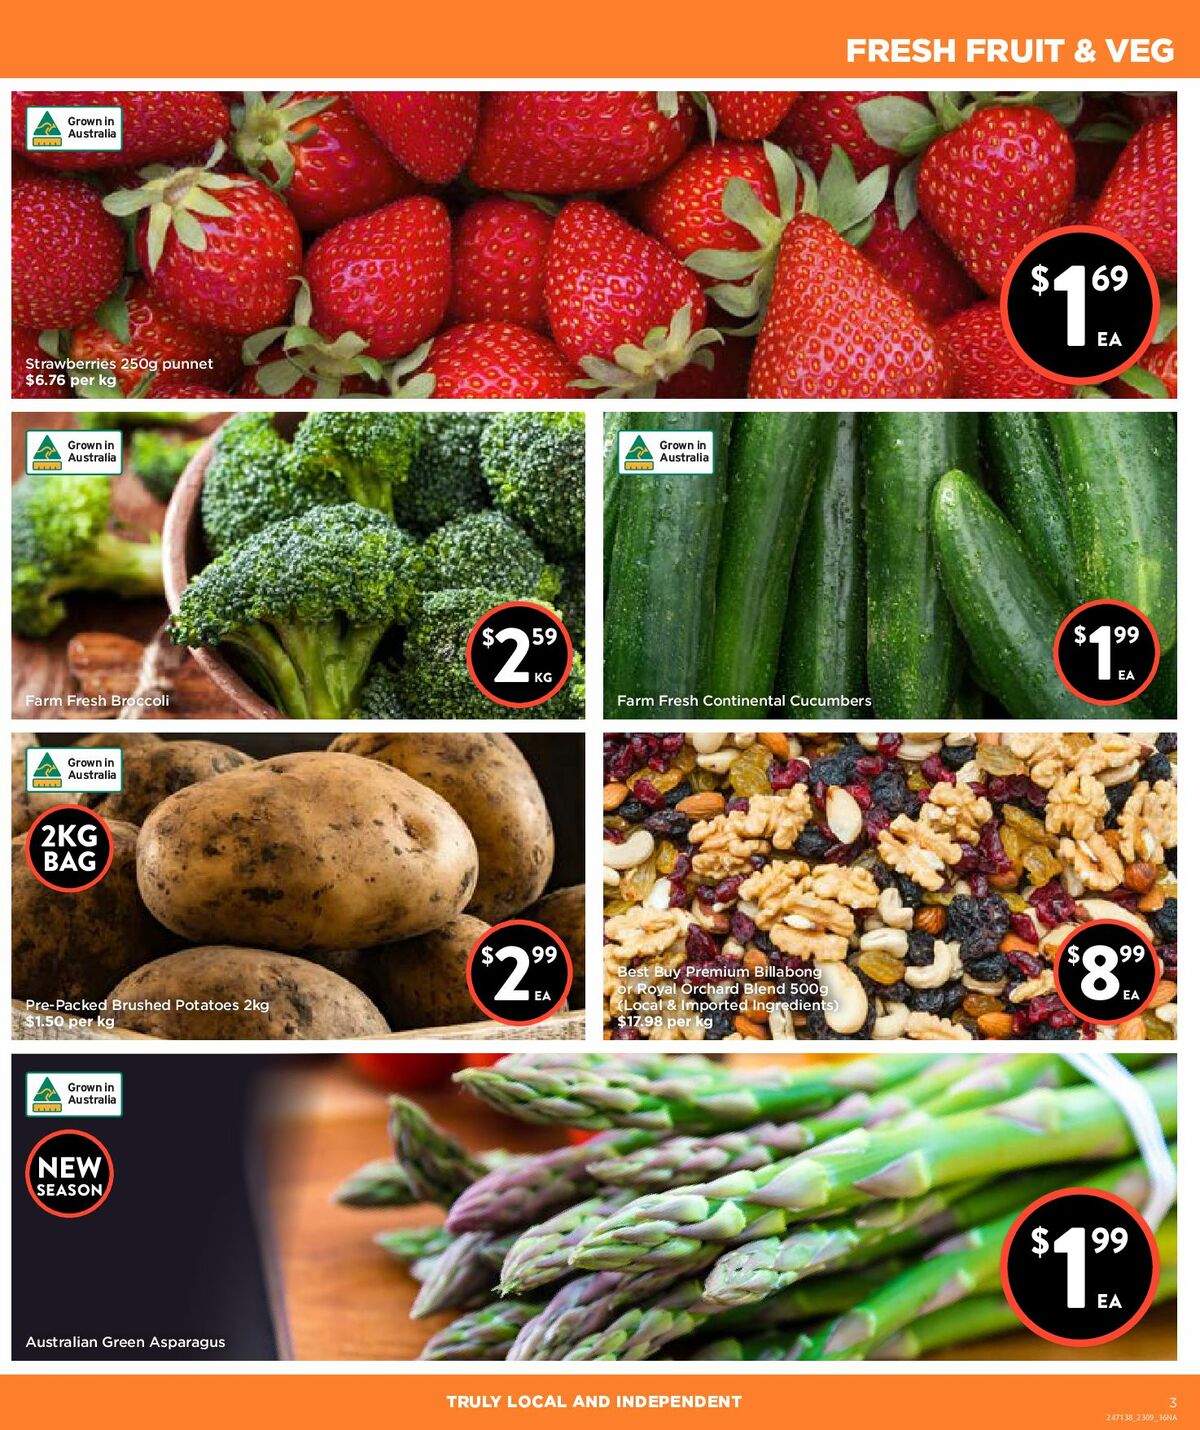 FoodWorks Supermarket Catalogues from 23 September